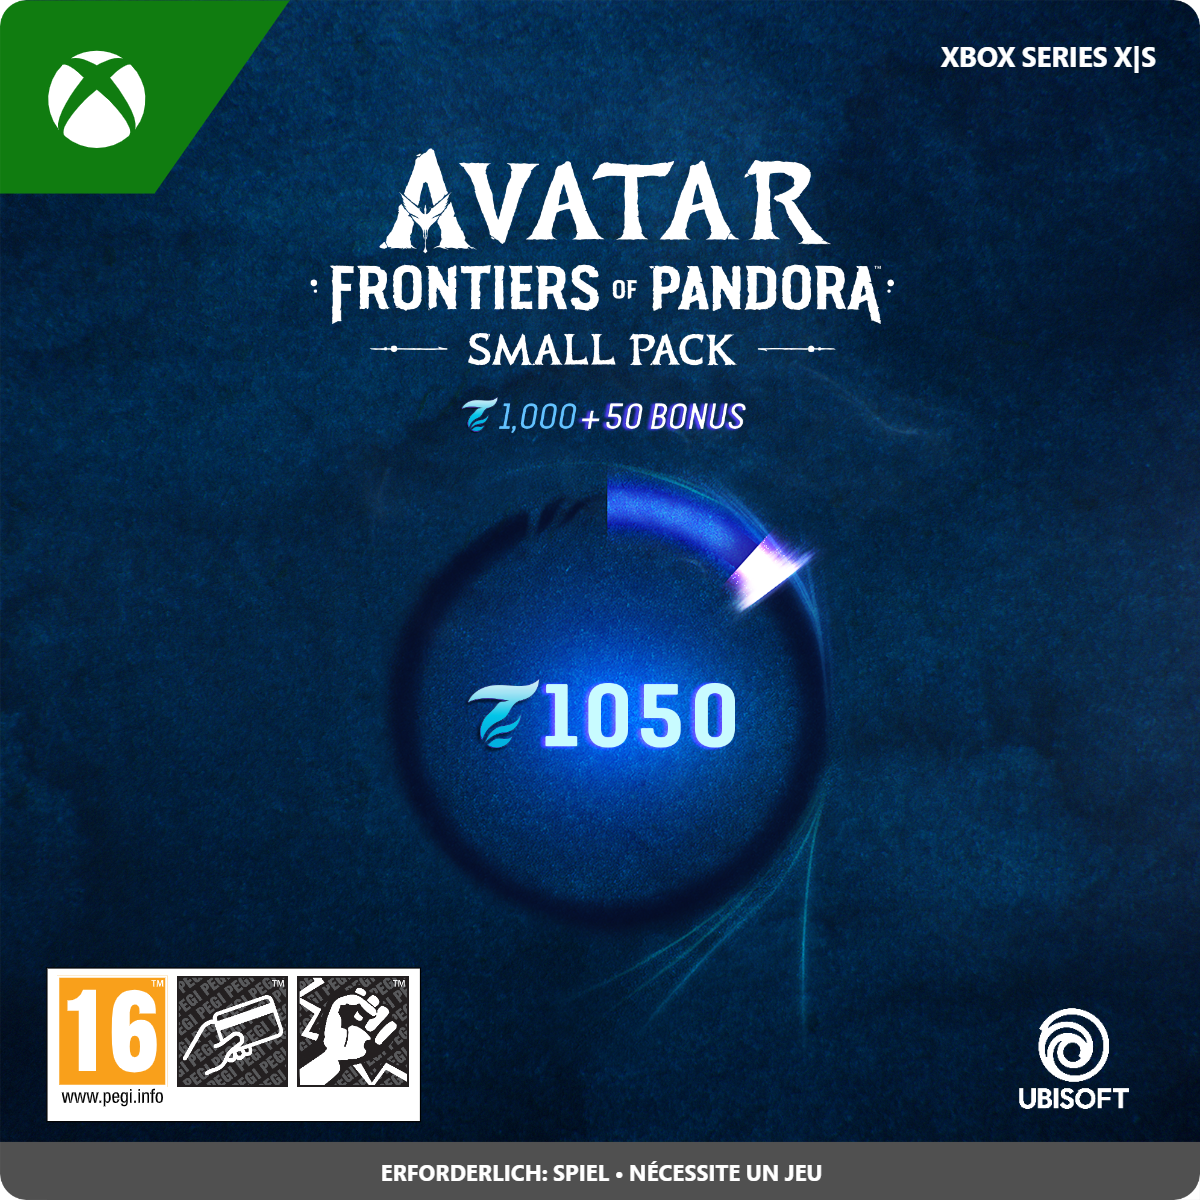 Xbox Avatar Frontiers of Pandora VC Pack 1050 Download Code (Xbox) zum Sofortdownload